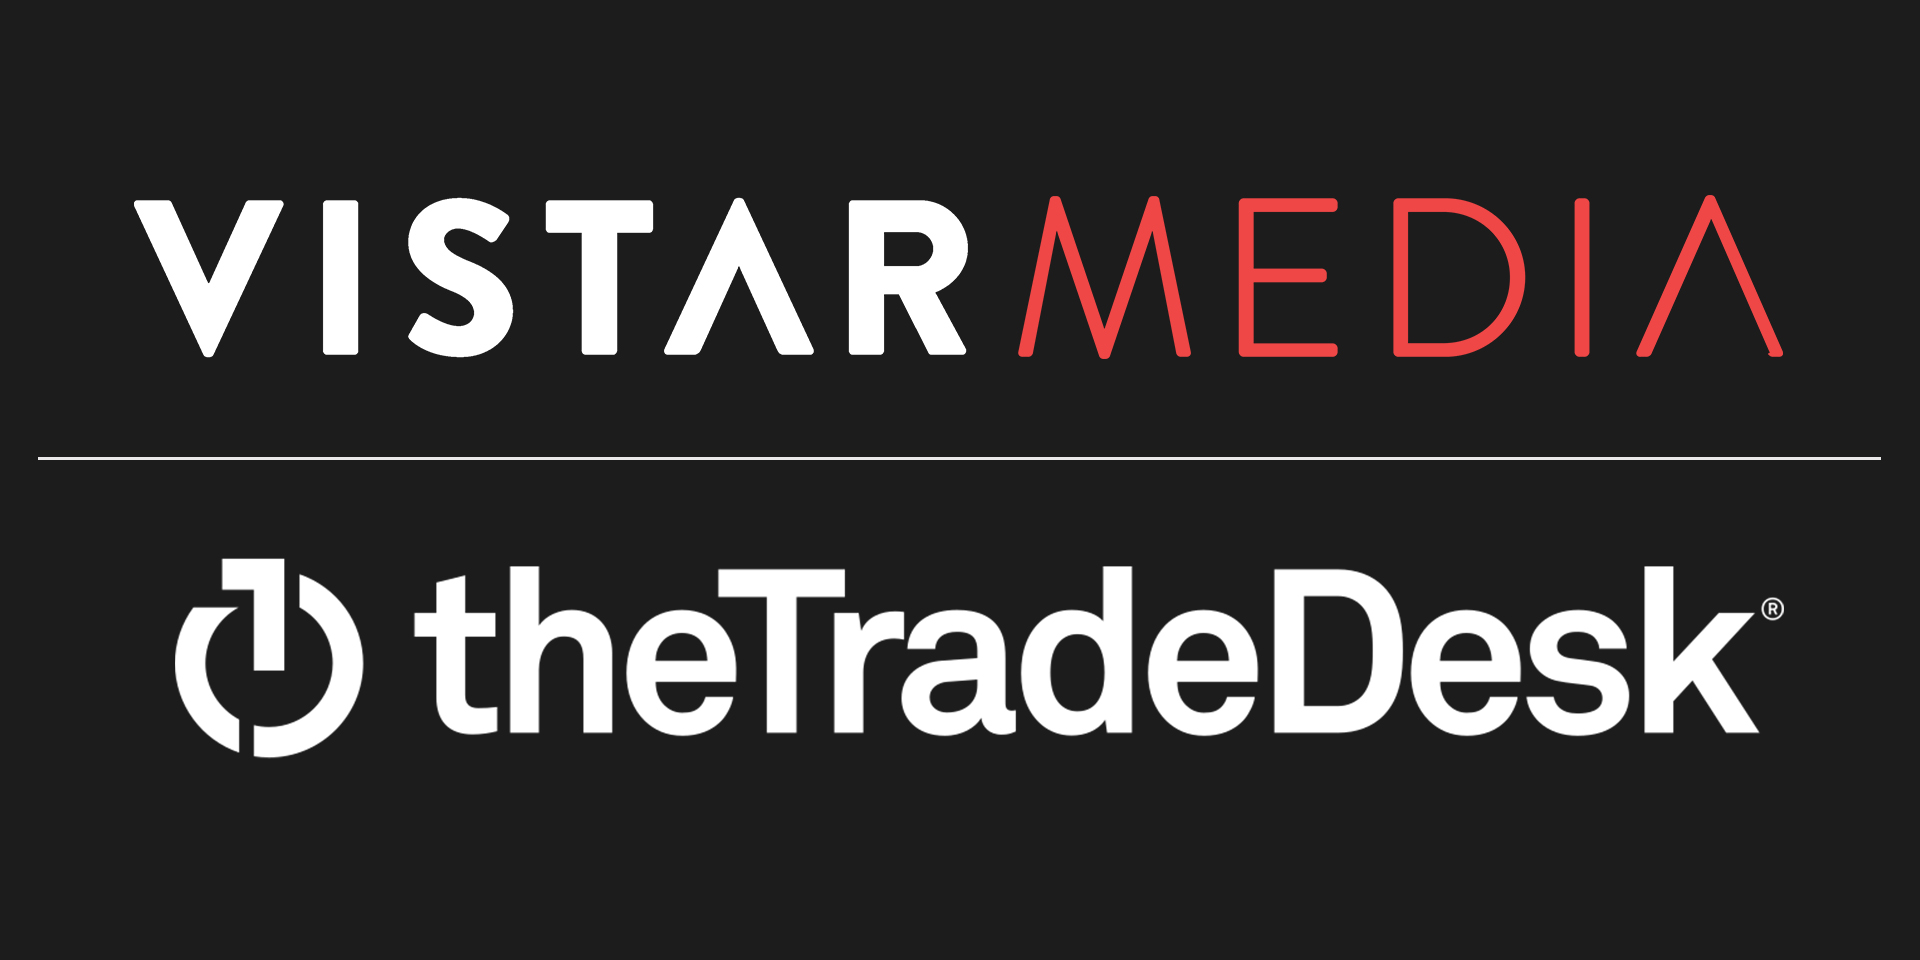 Vistar Media and The TradeDesk logos